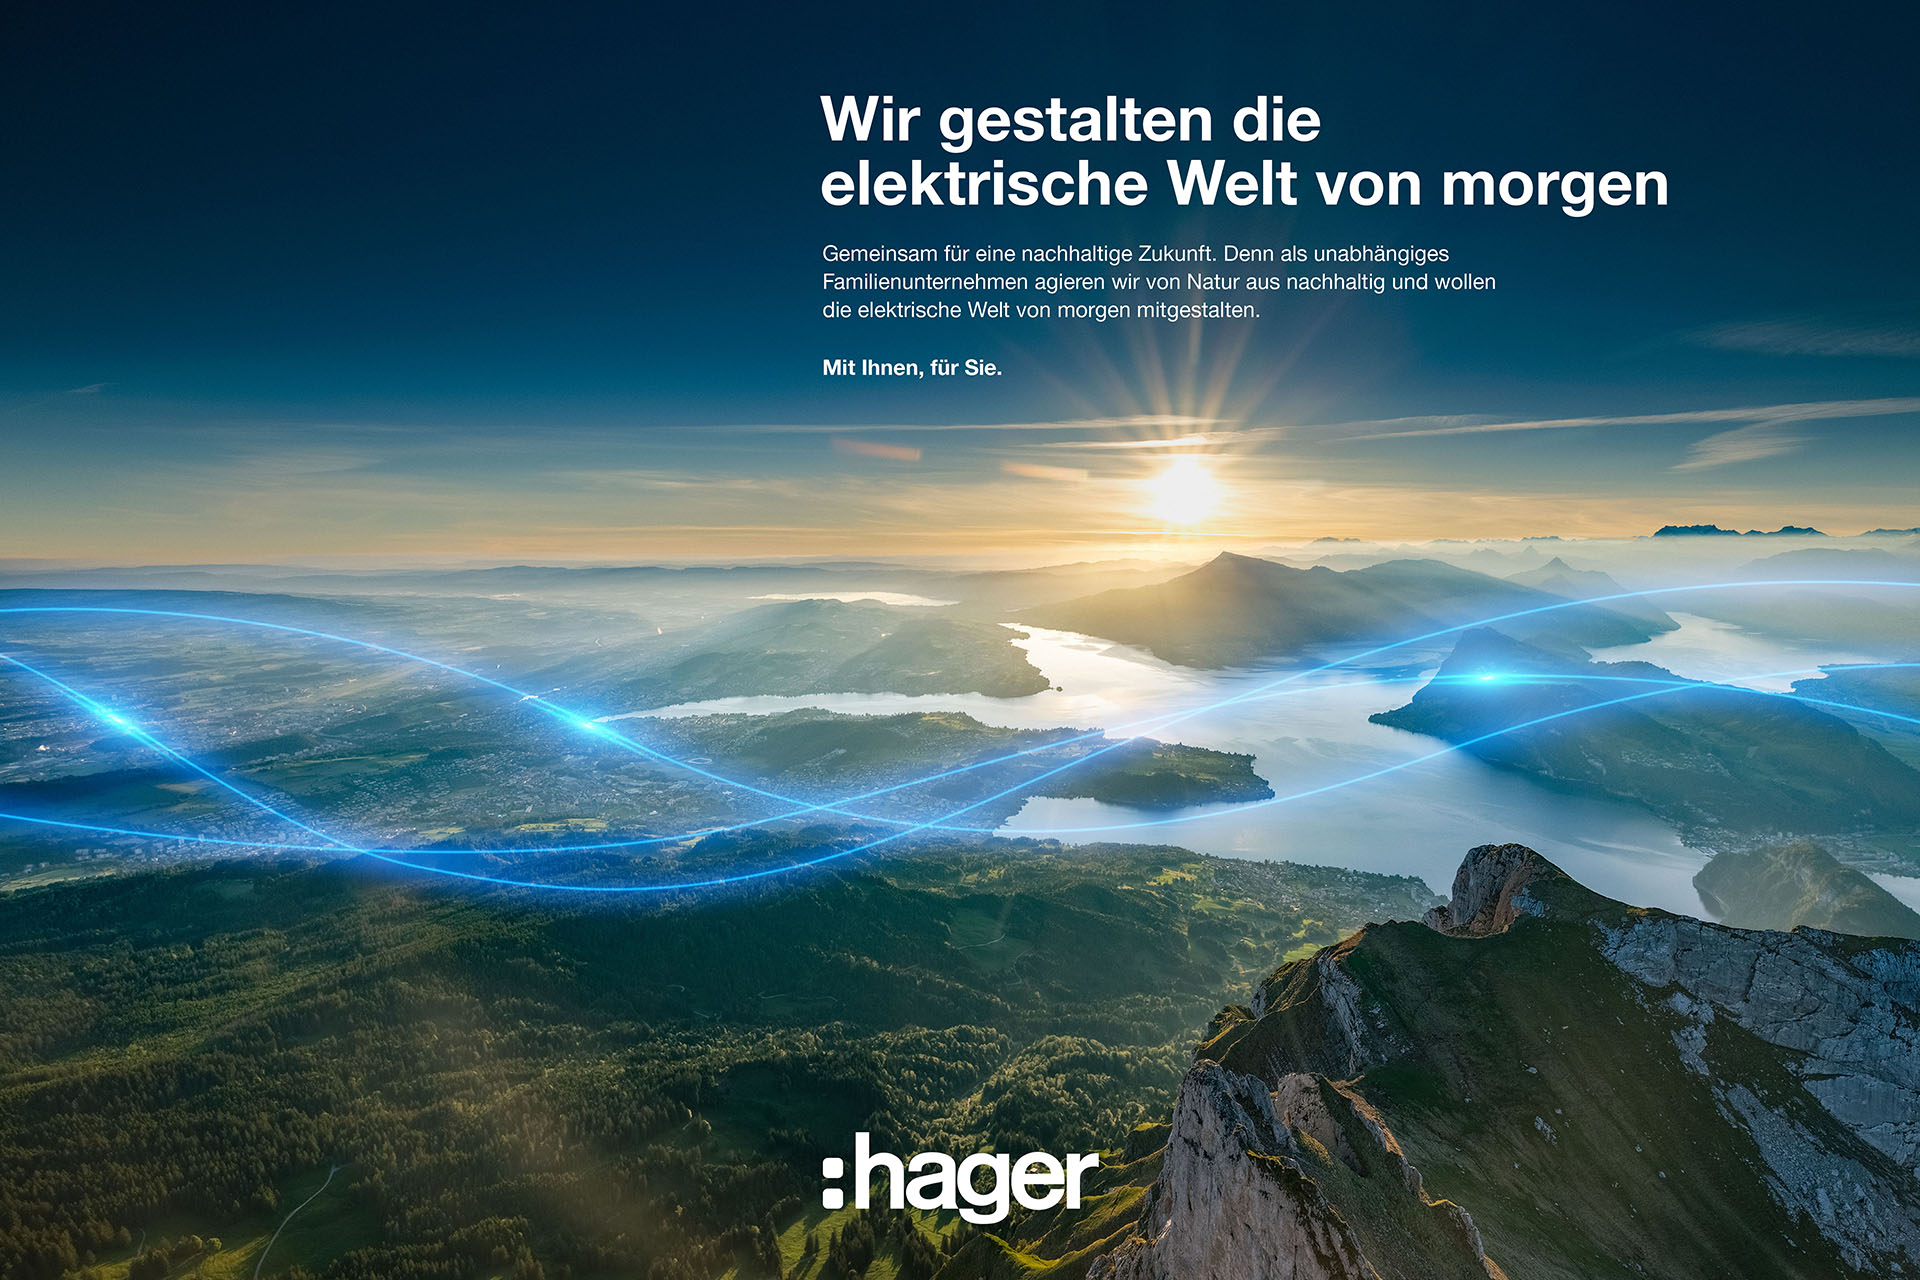 Hager kampagne Visual 3